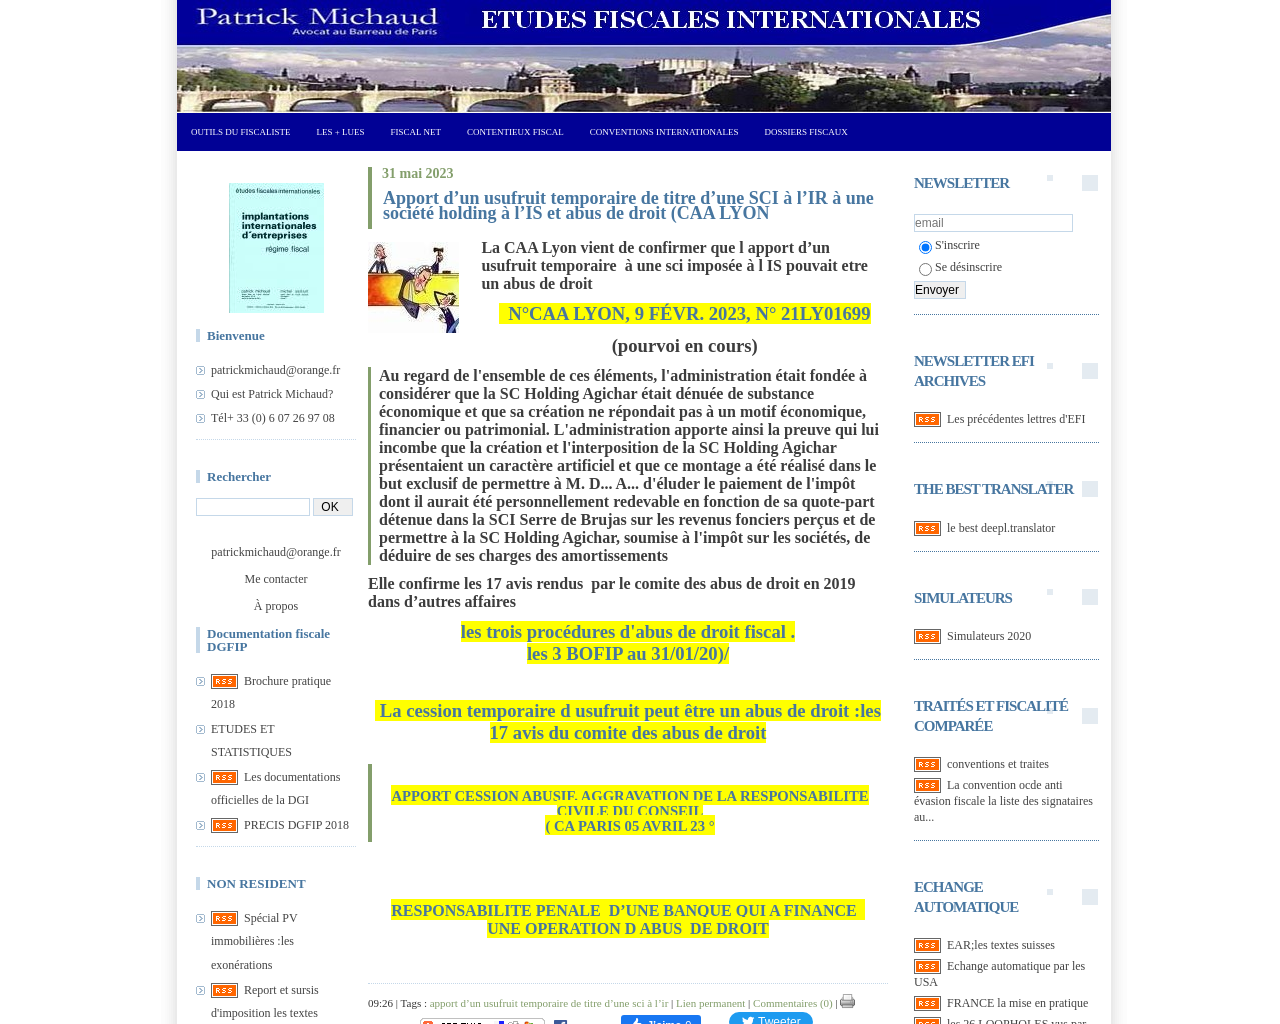 www.etudes-fiscales-internationales.com